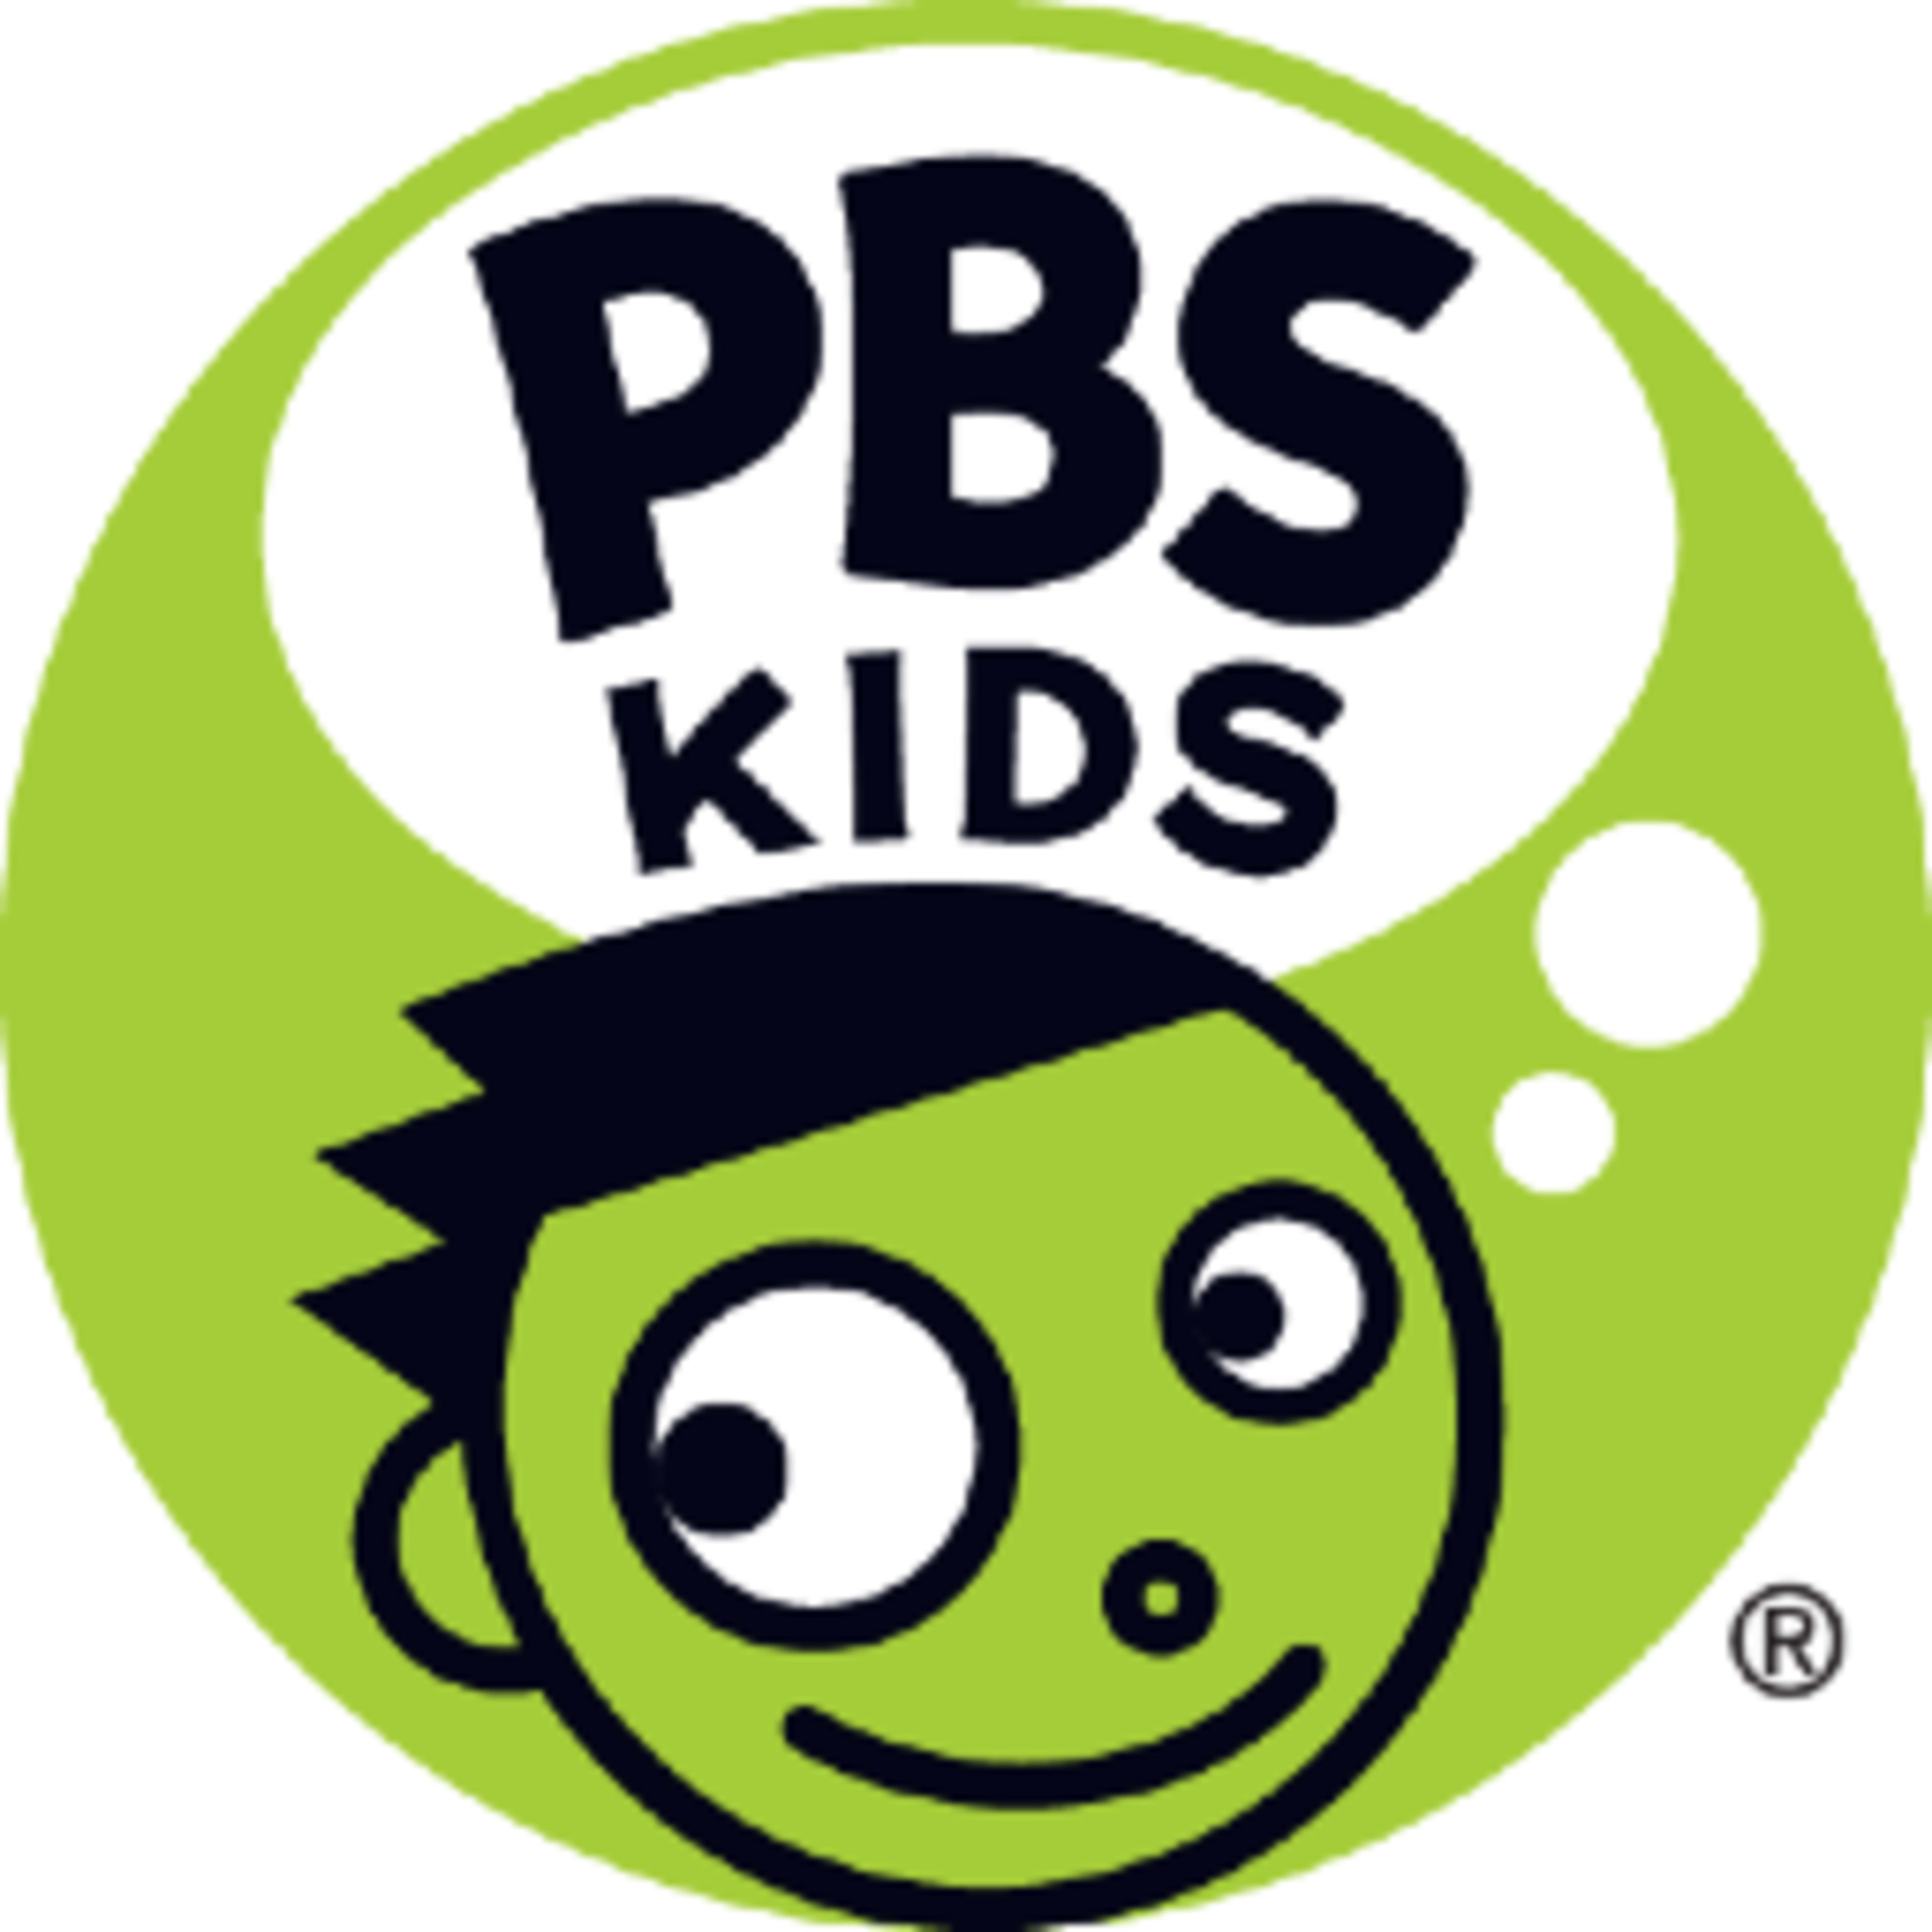 PBS KIDS Shop Code